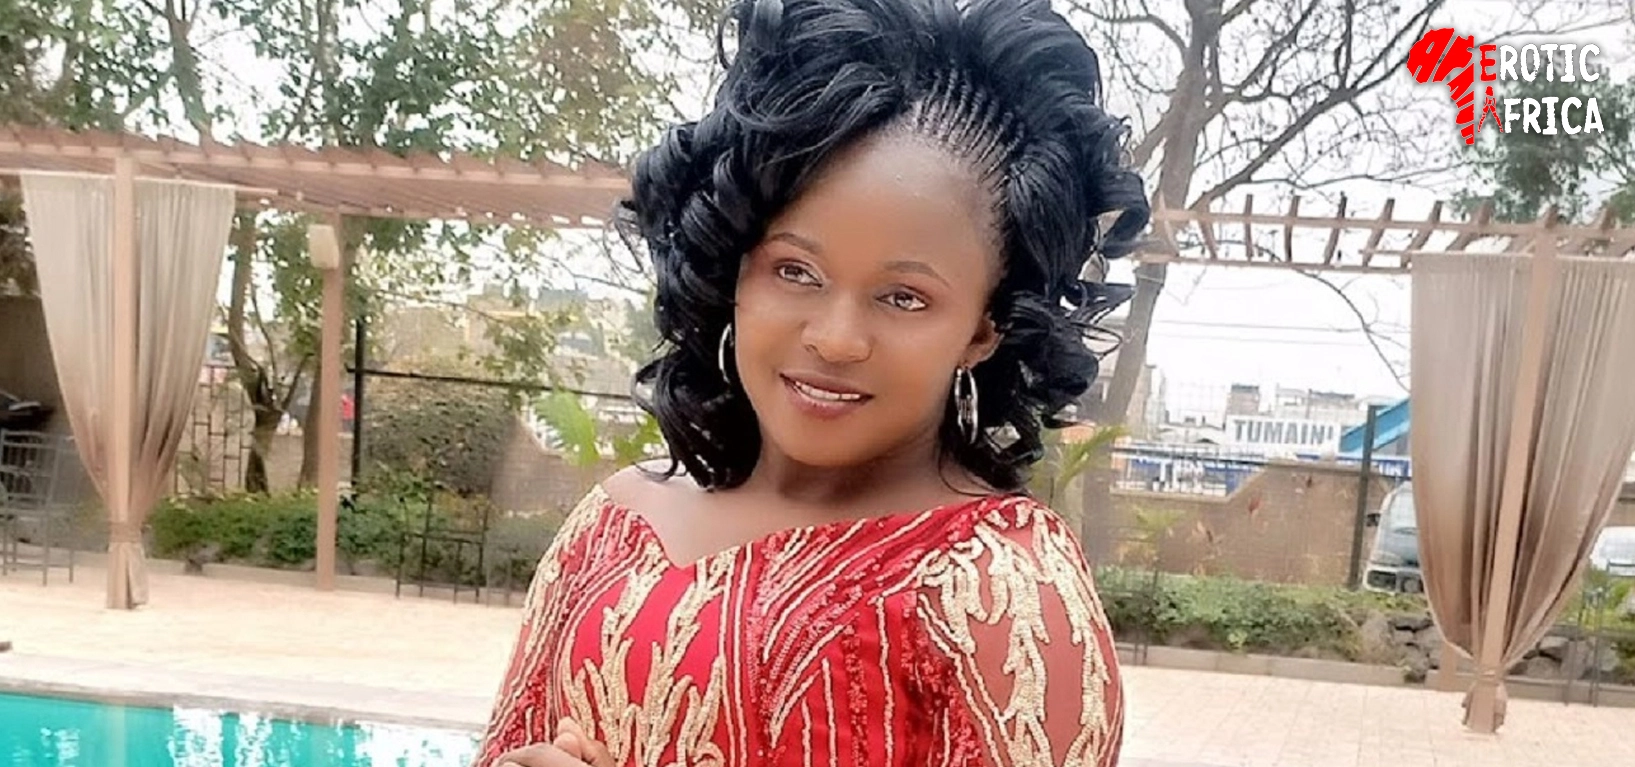 Roseline Katungwa